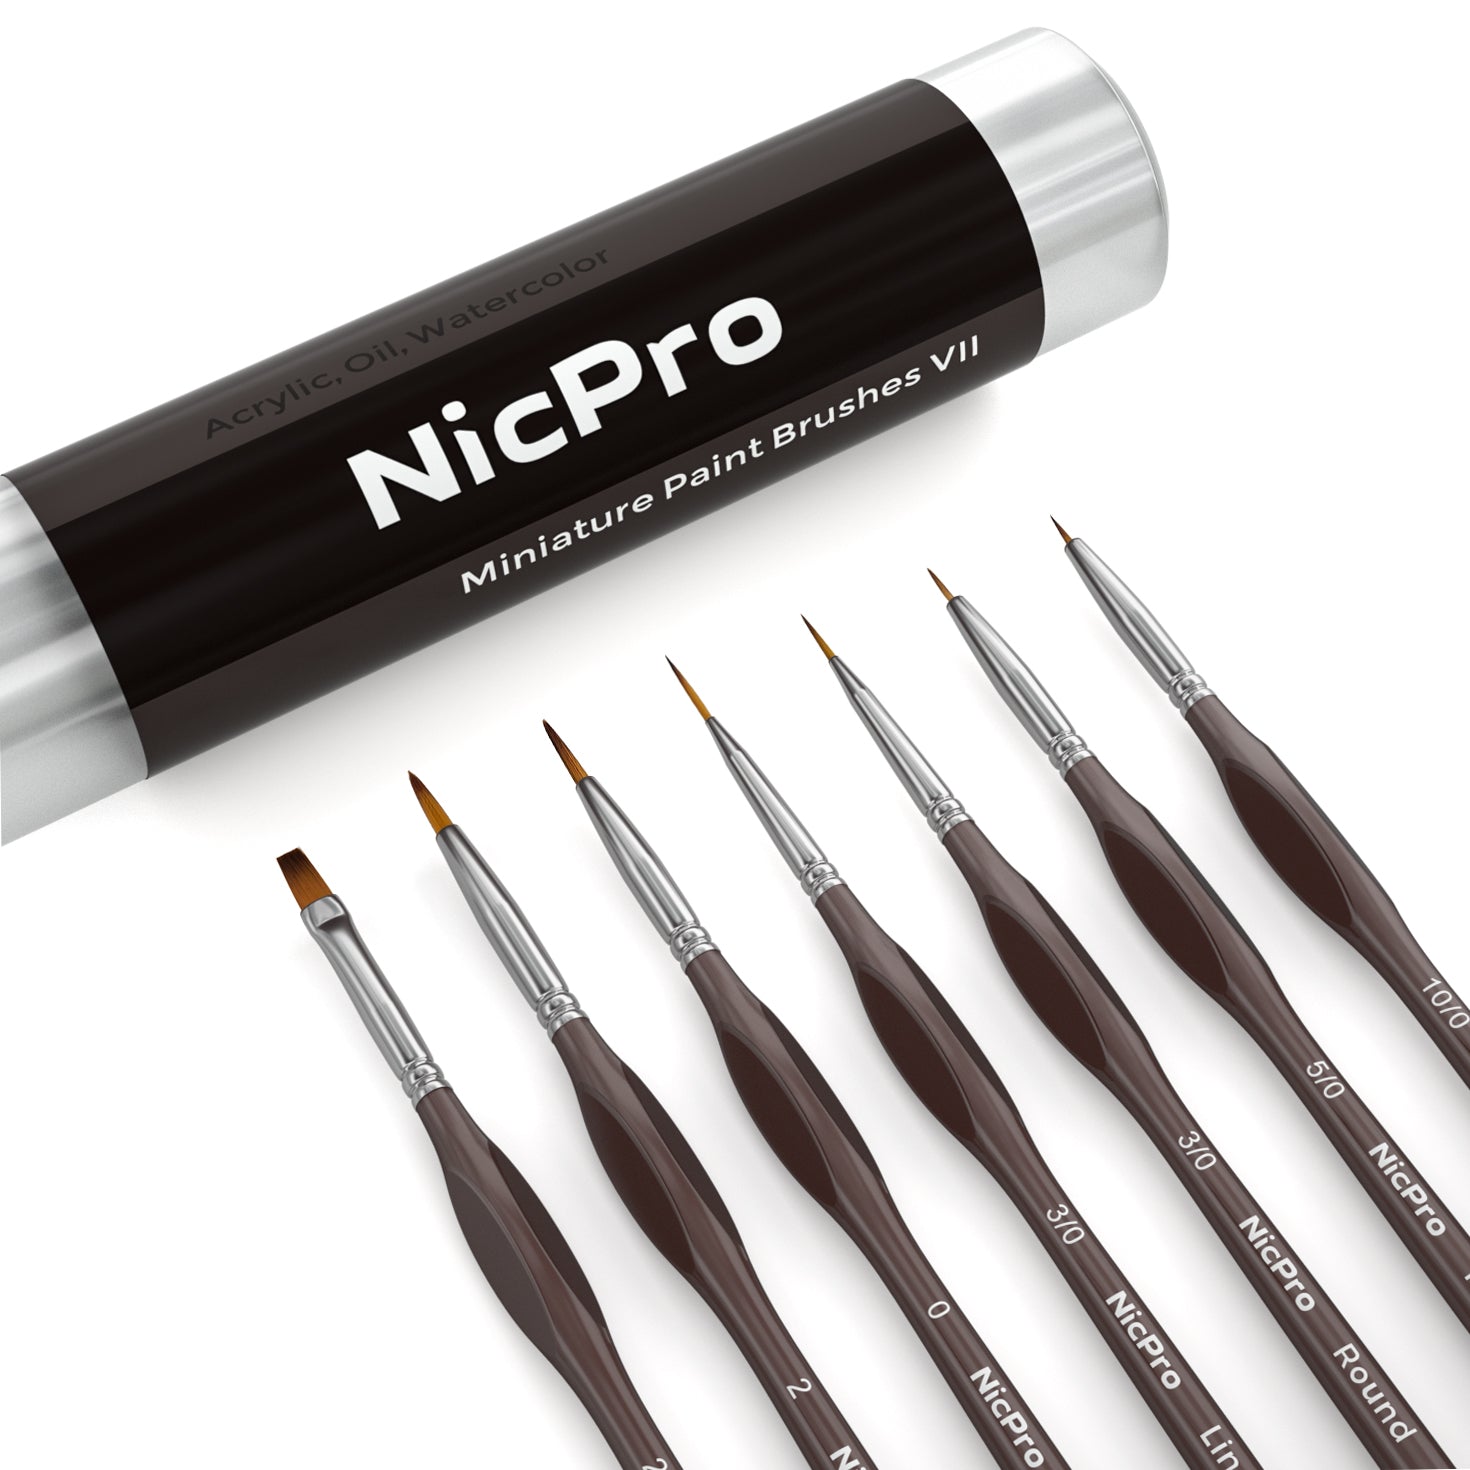 Nicpro 7 PCS Micro Detail Paint Brush Set, Professional Miniaturev Art